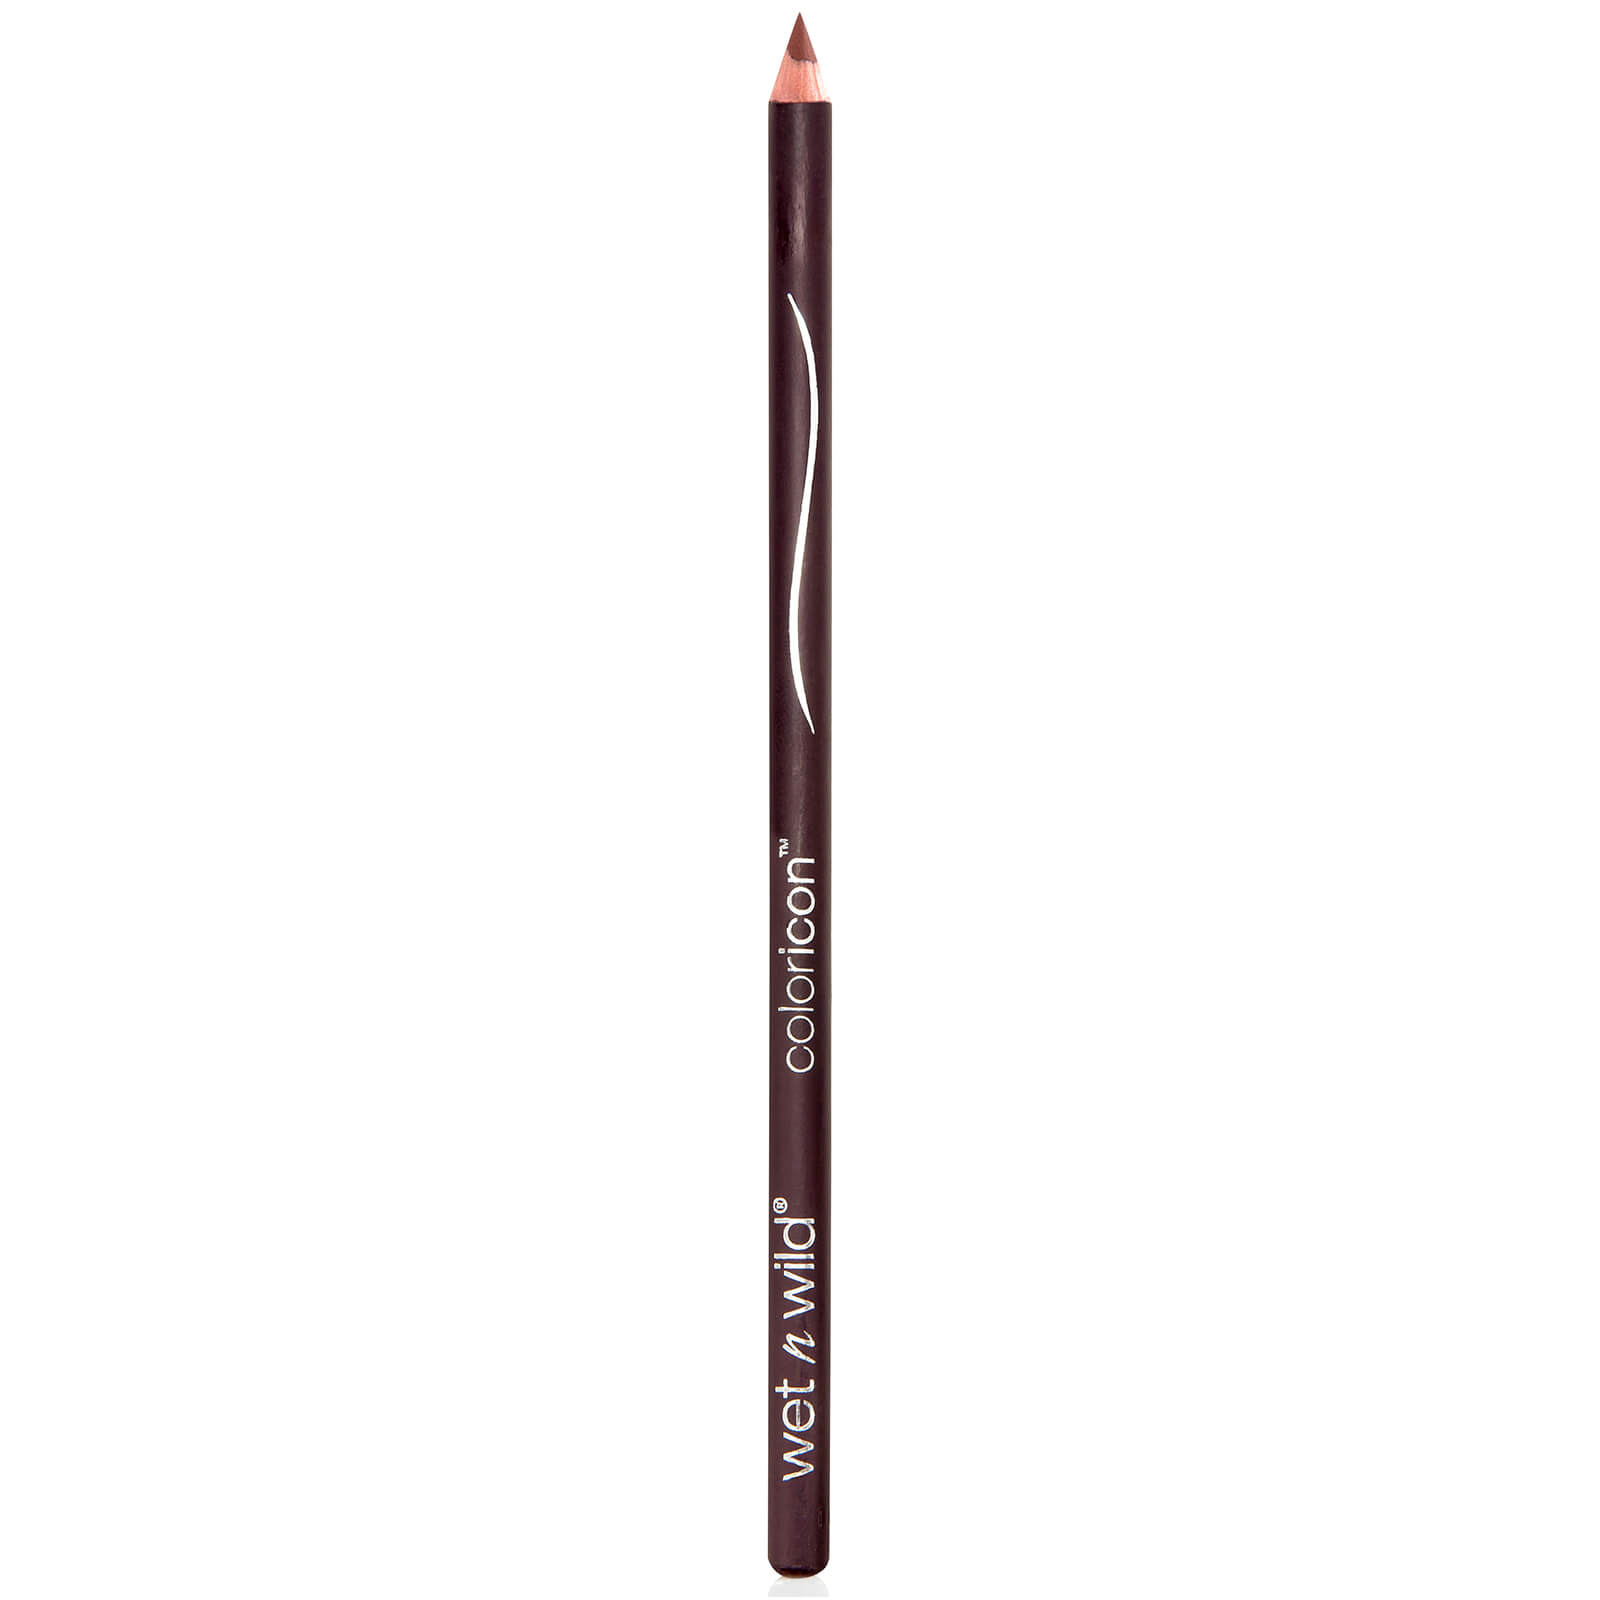 Photos - Lipstick & Lip Gloss Wet n Wild coloricon Lipliner Pencil 1.4g  - Chestnut E711 (Various Shades)